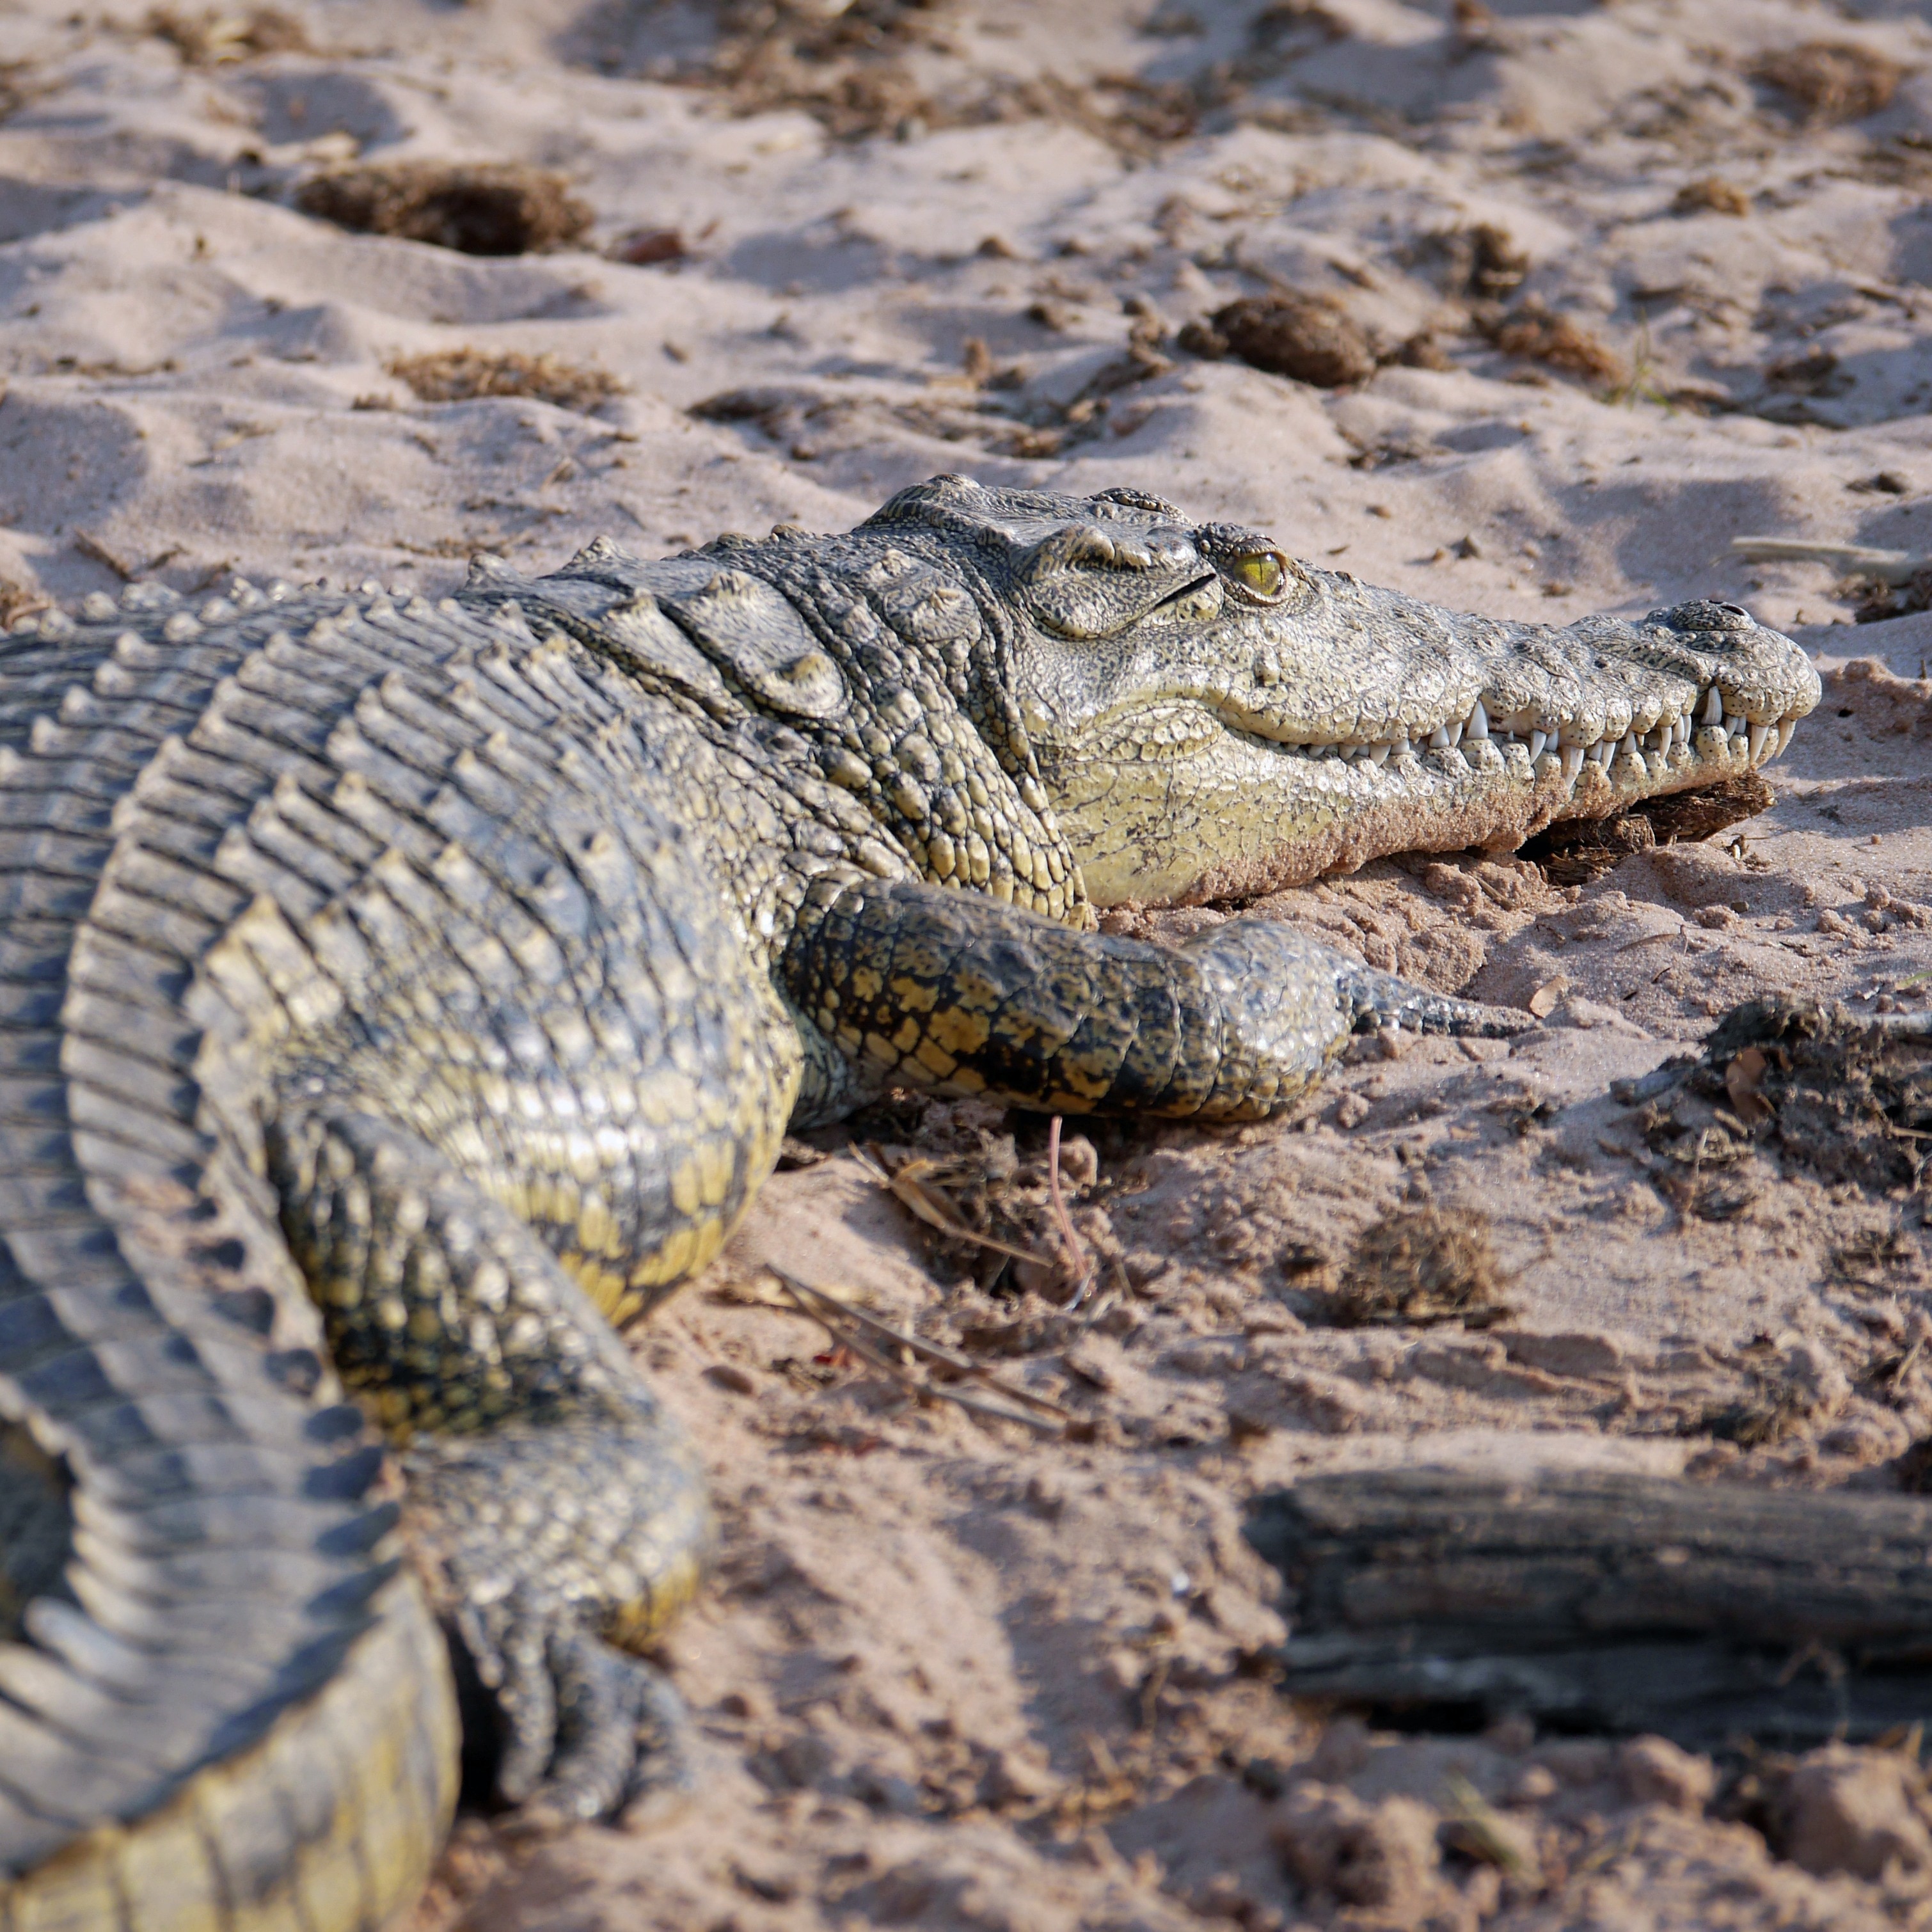 Dangerous, Africa, Botswana, Crocodile, reptile, animals in the wild